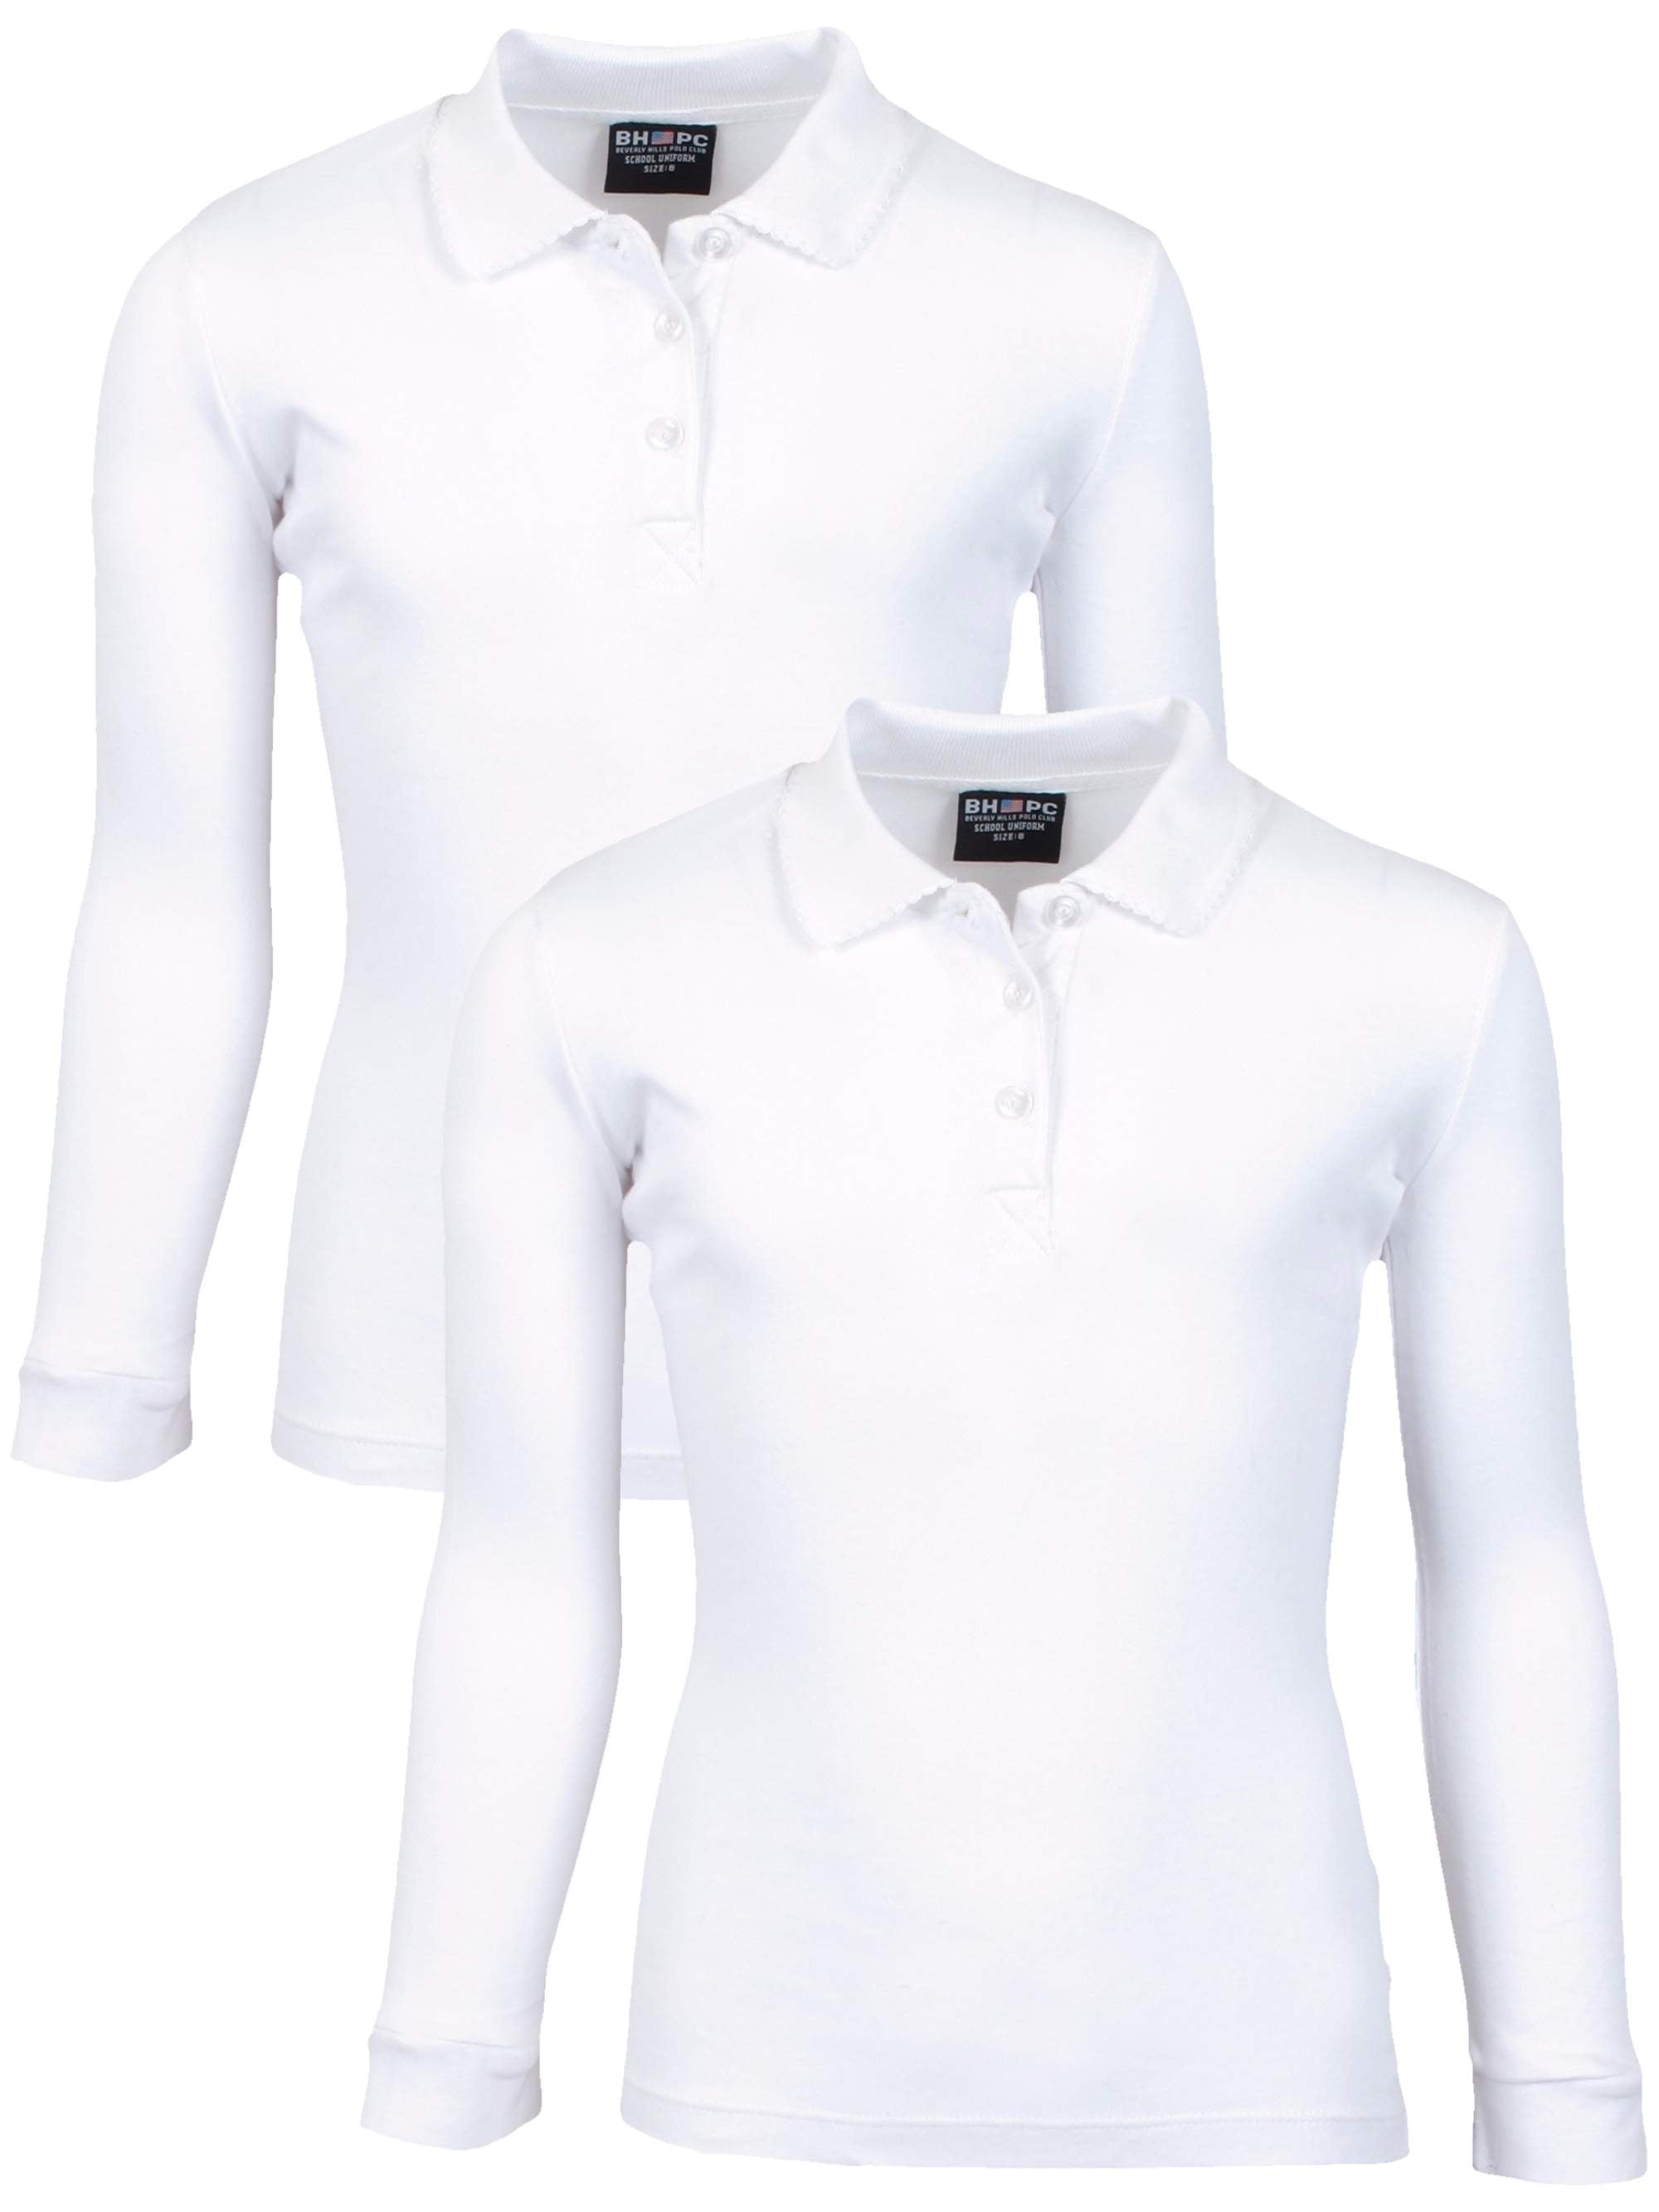 Beverly Hills Polo Club Girls Short Sleeve School Uniform Knit Polo Shirts 3 Pack